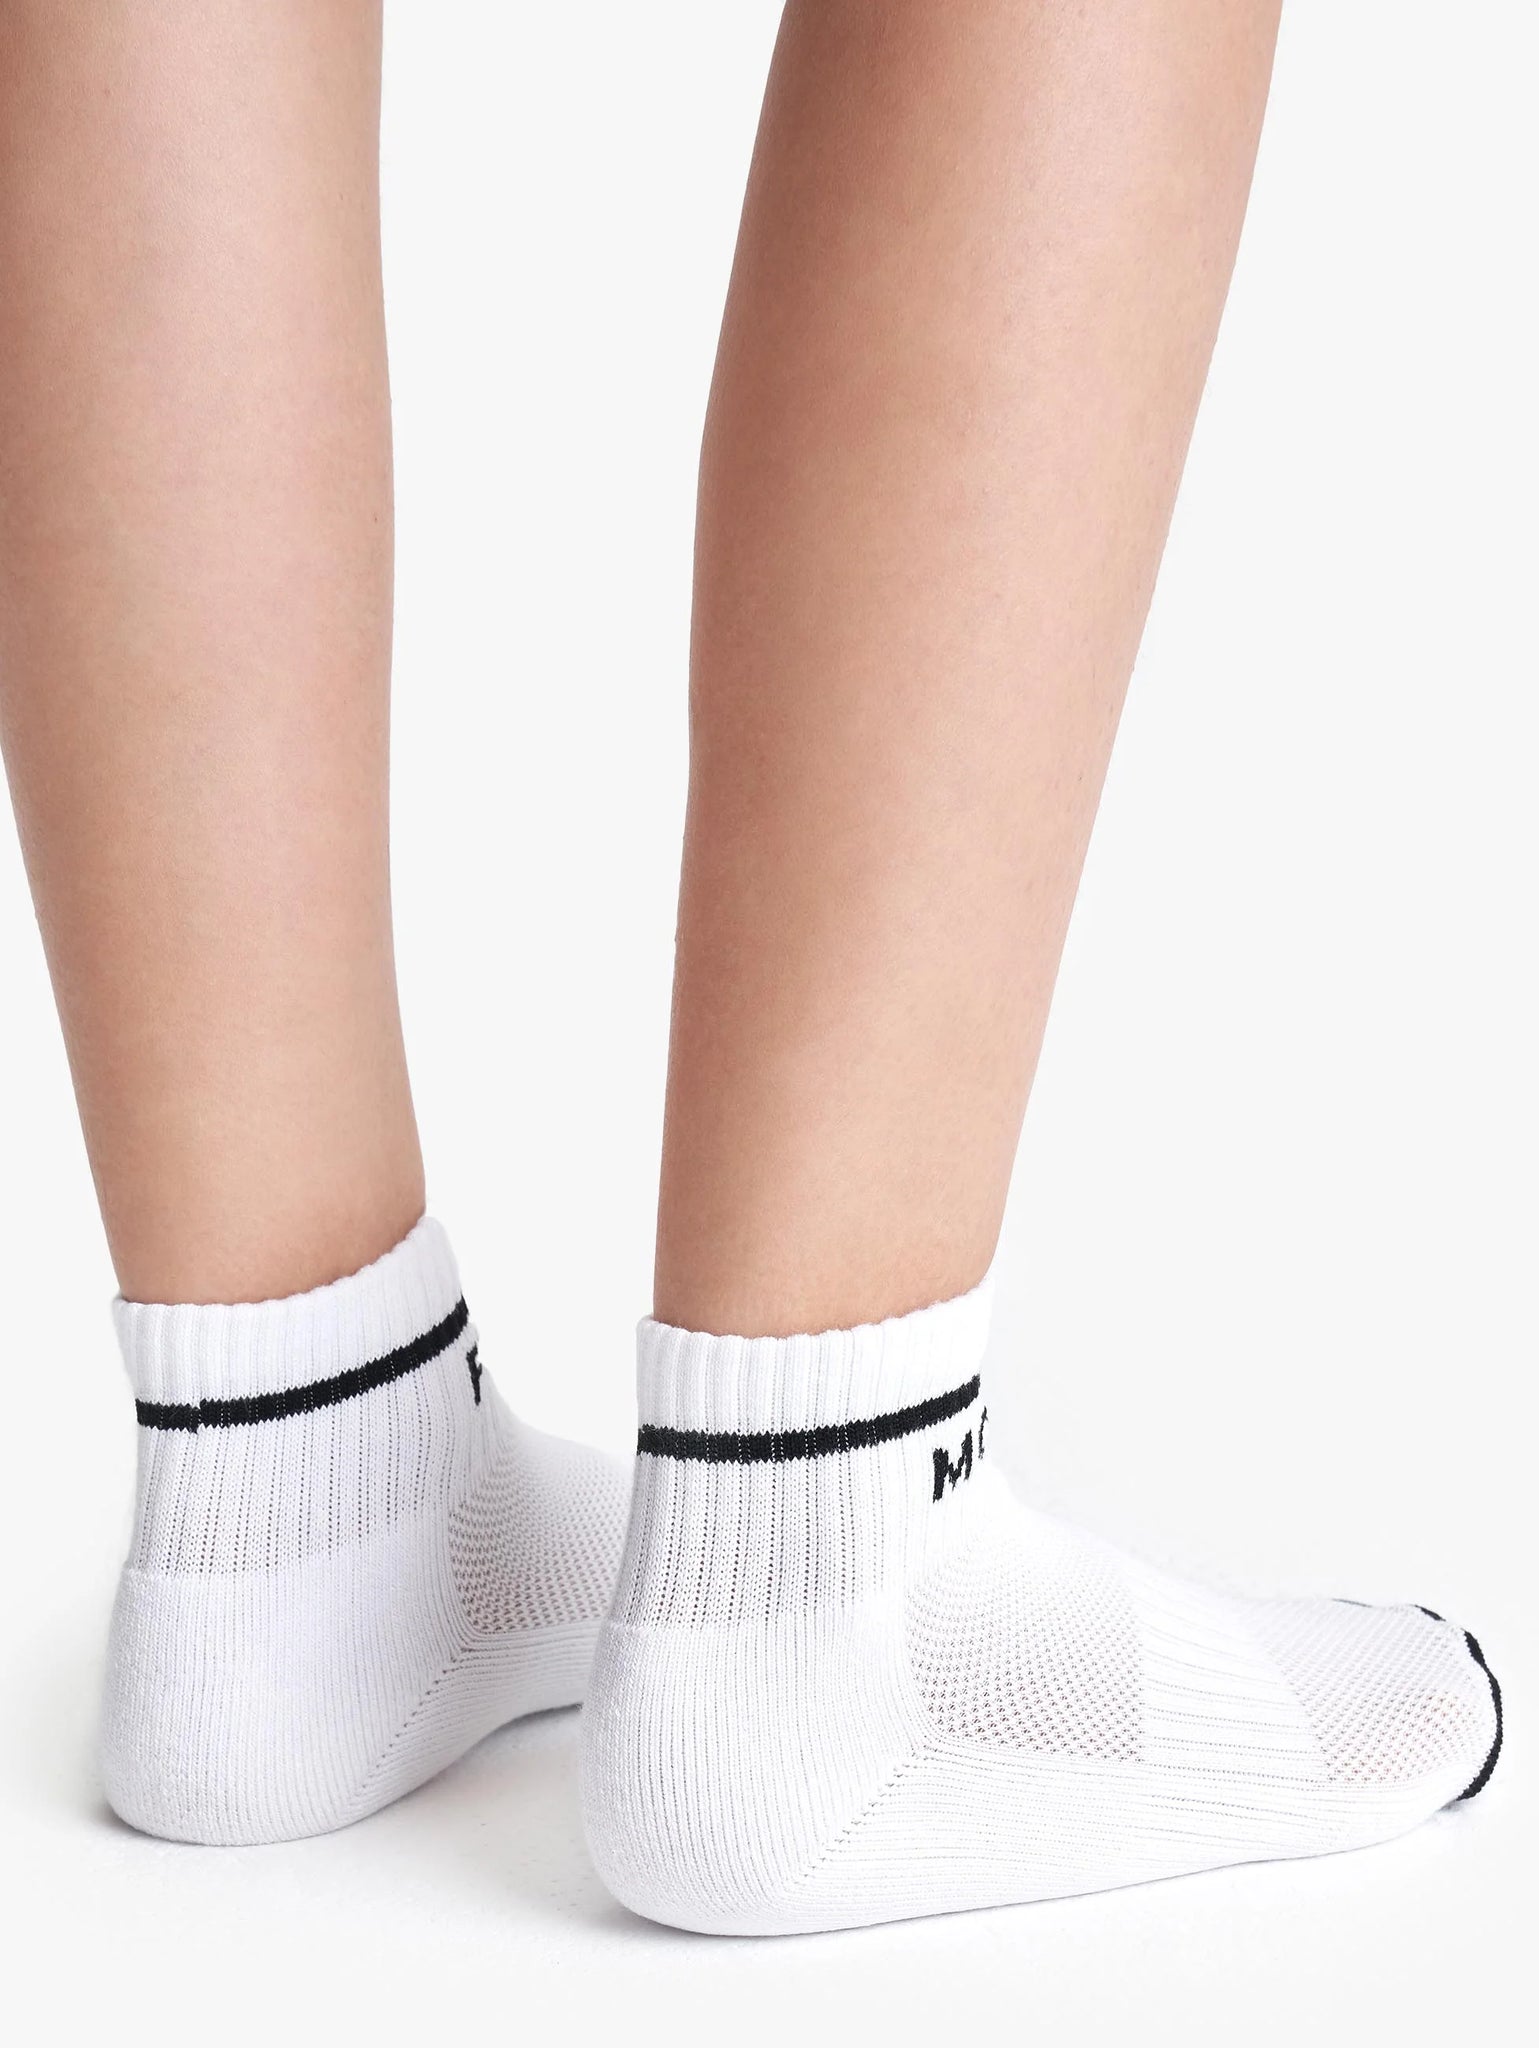 Baby Steps Ankle MF in White/Black